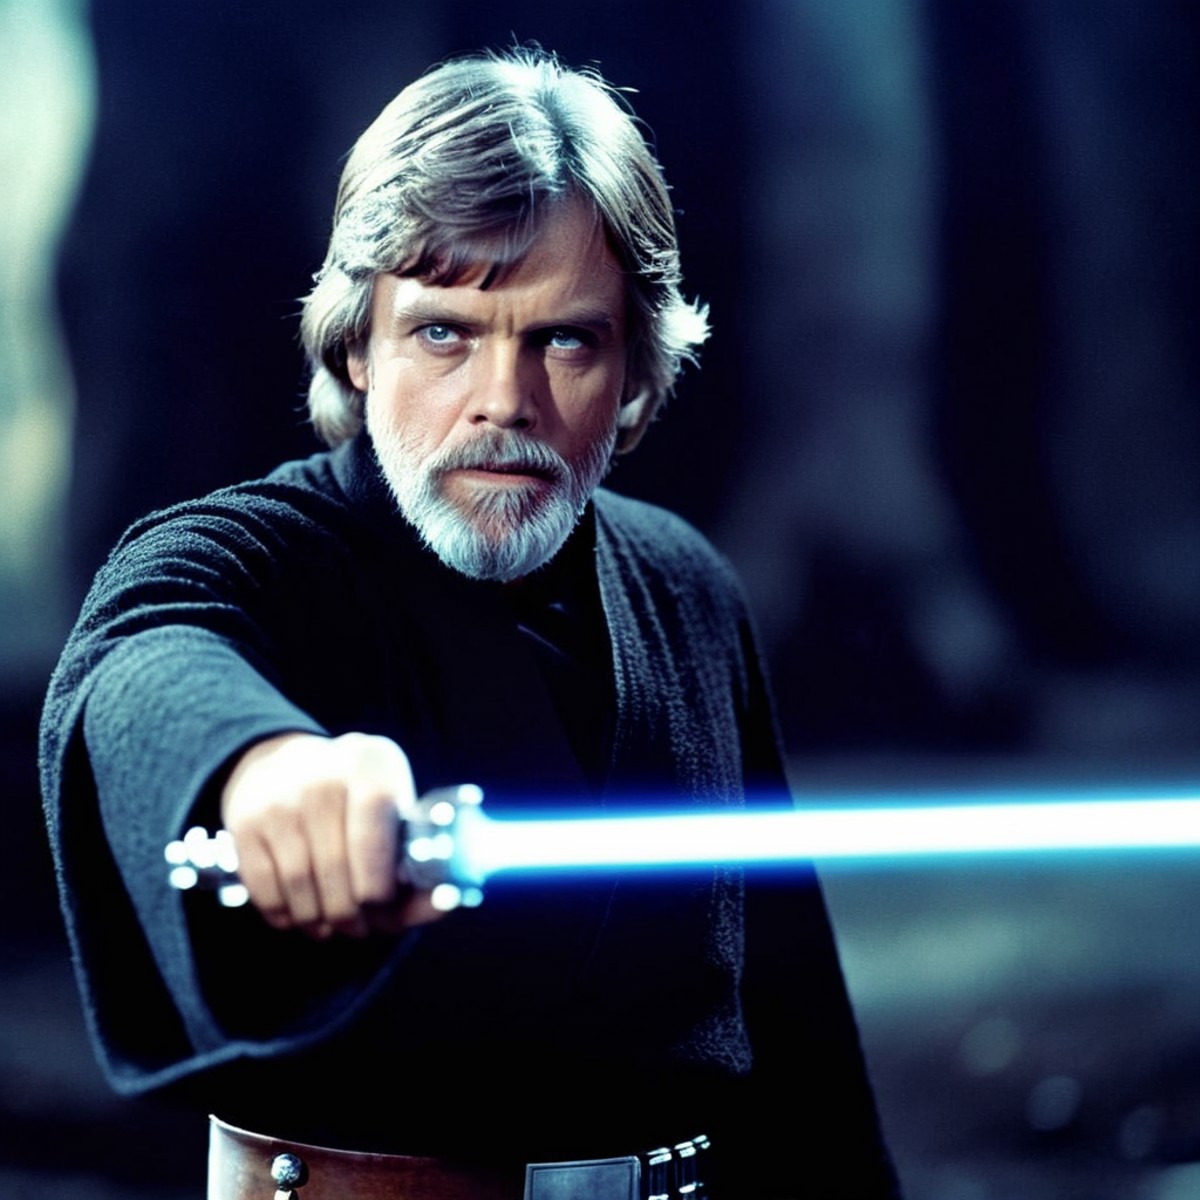 cinematic film still of  <lora:Luke Skywalker:1.2>
Luke Skywalker a man with a grey beard and a light saber in star wars u...